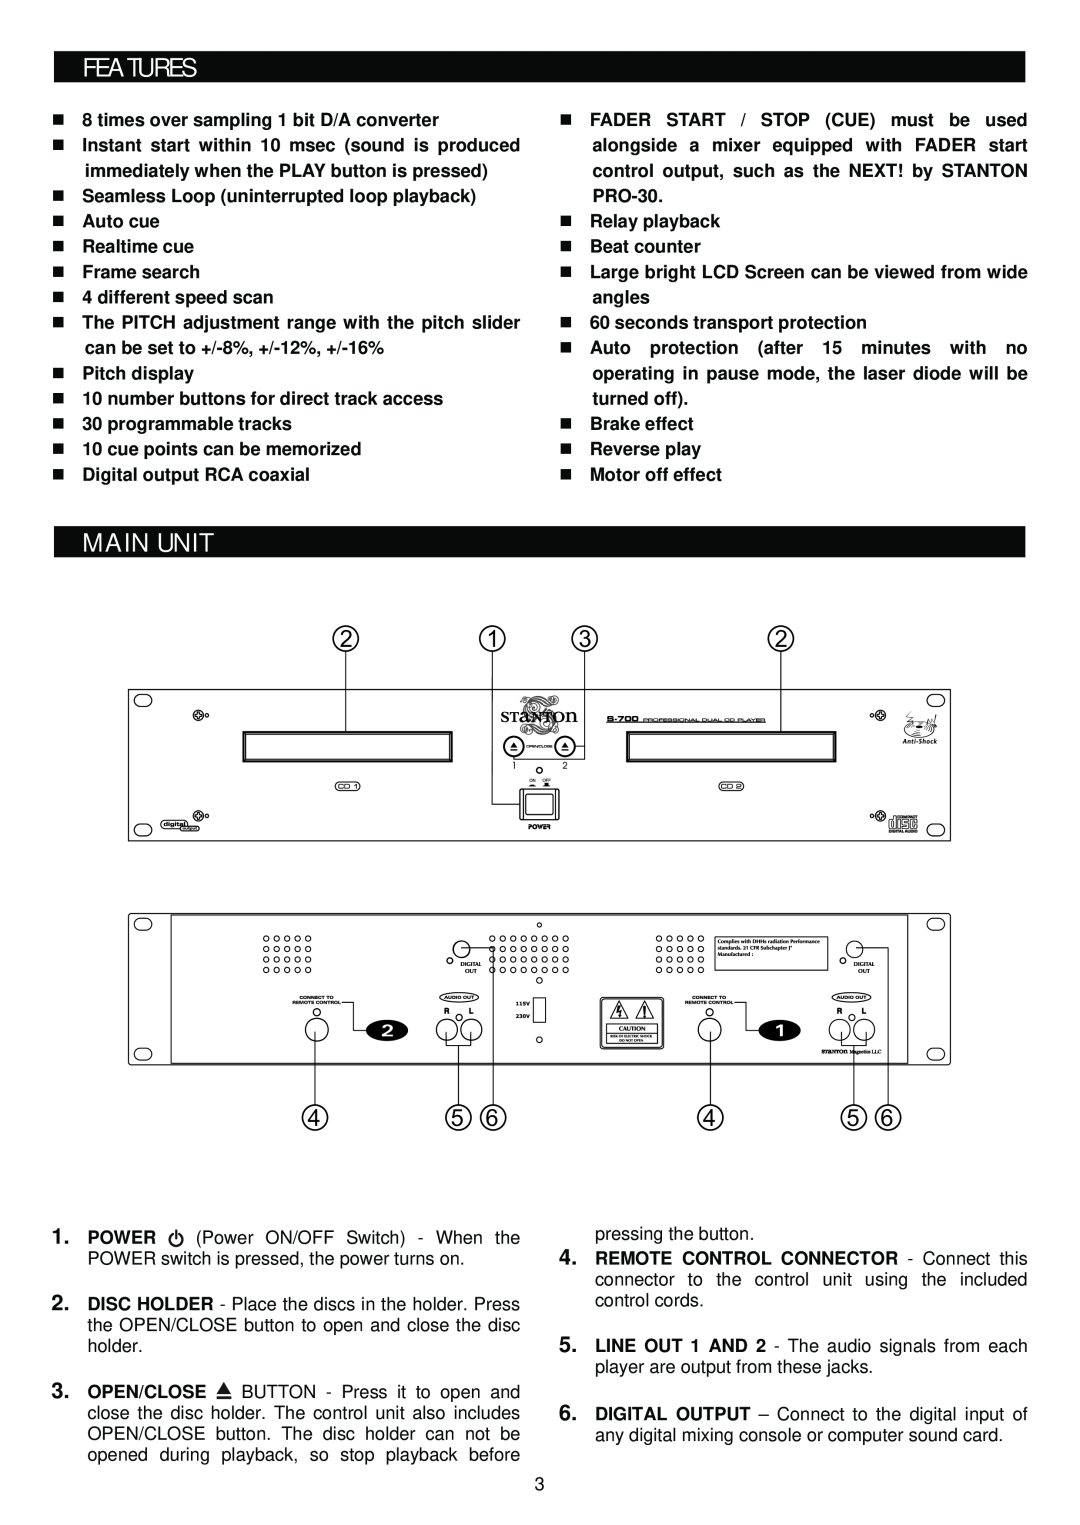 Stanton S-700 manual Features, Main Unit 